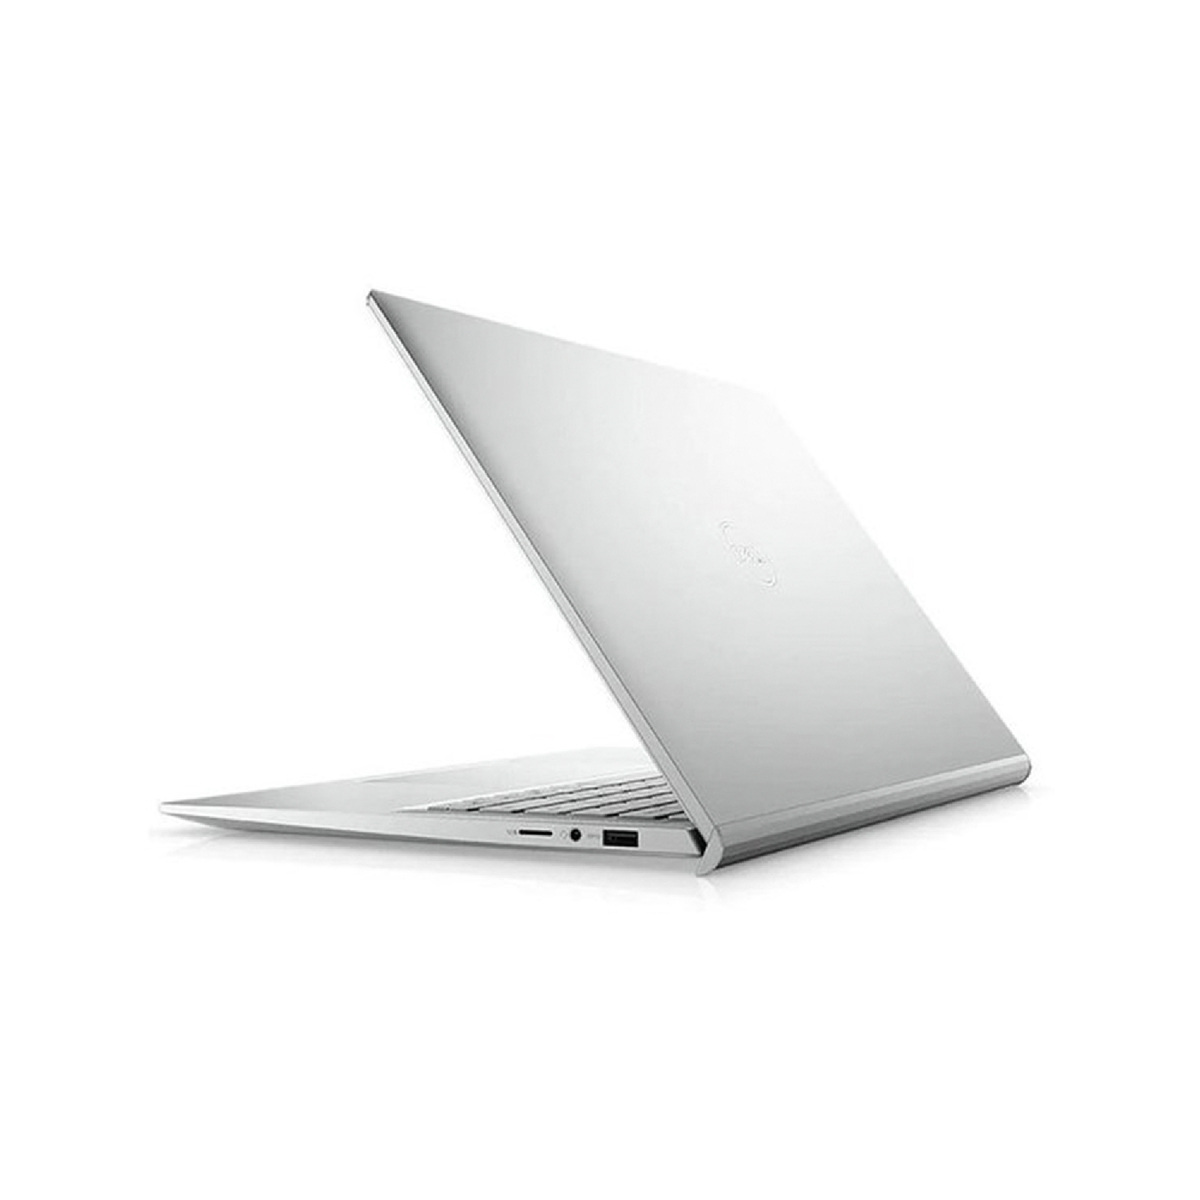 Dell Notebook Inspiron 7400-INS14-130,Intel Core i7,16GB RAM,1TB SSD,2GB Graphics,14.5" QHD,Windows 10,English/Arabic Keyboard